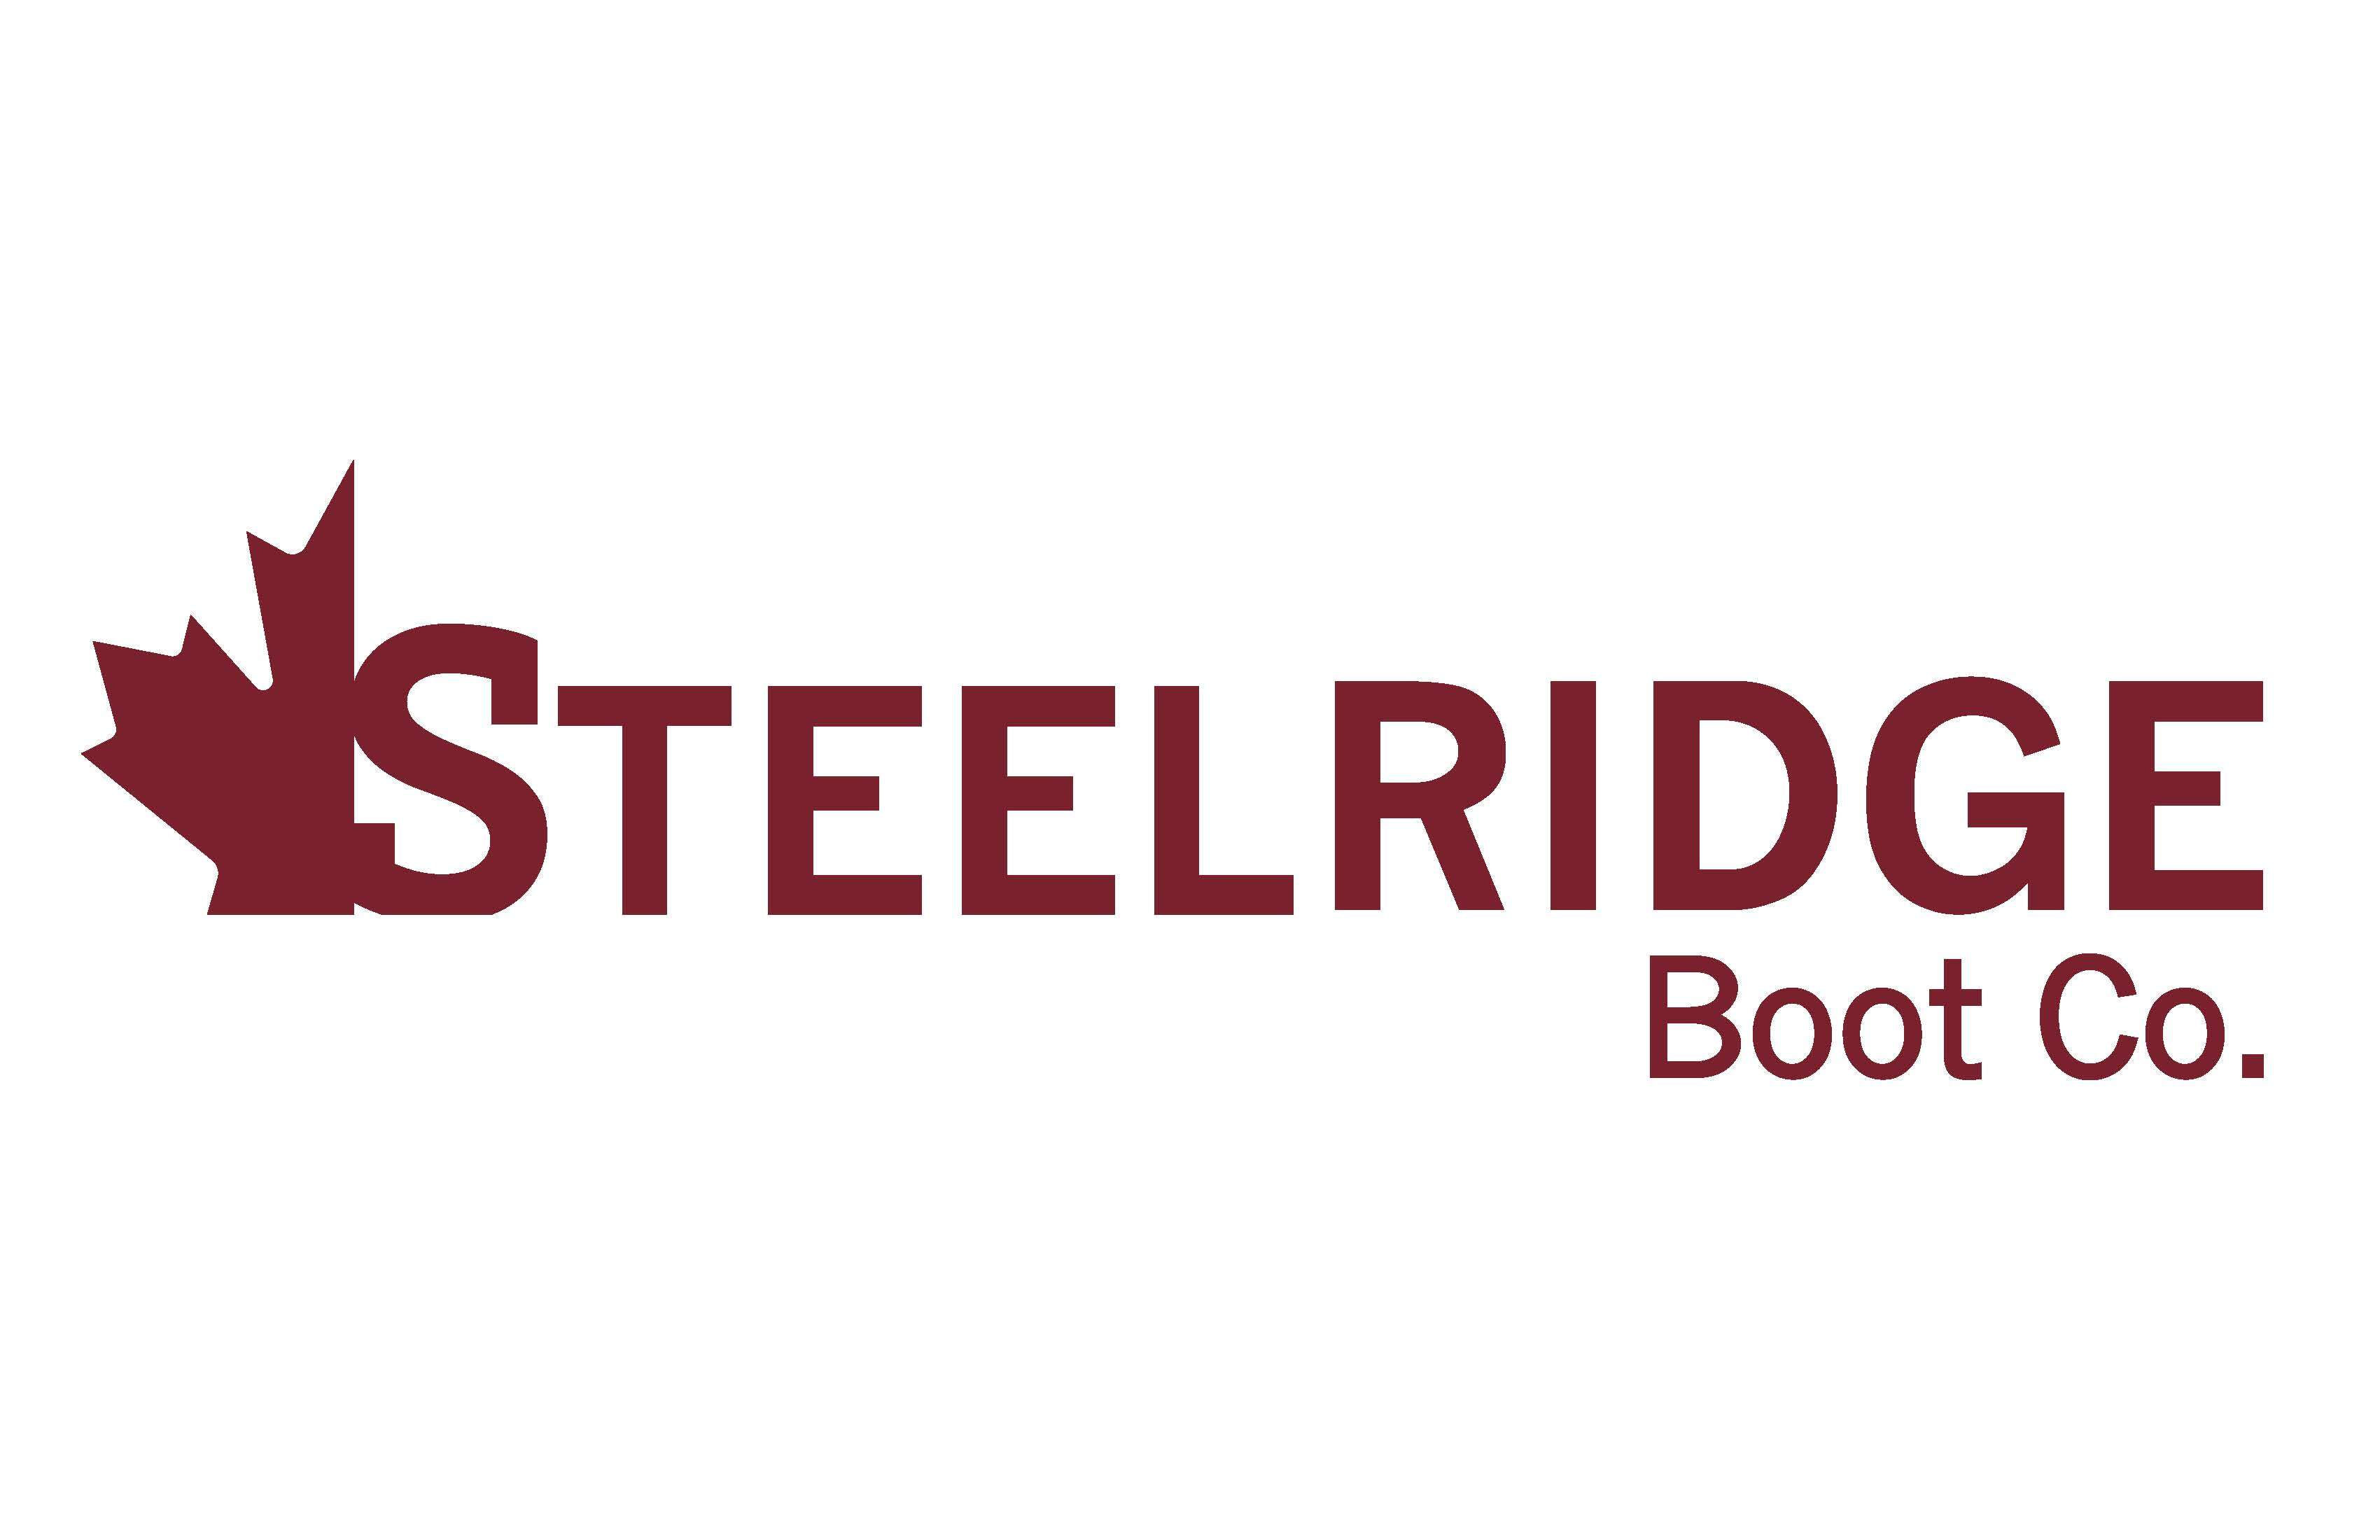 Steelridge Boot Co. 